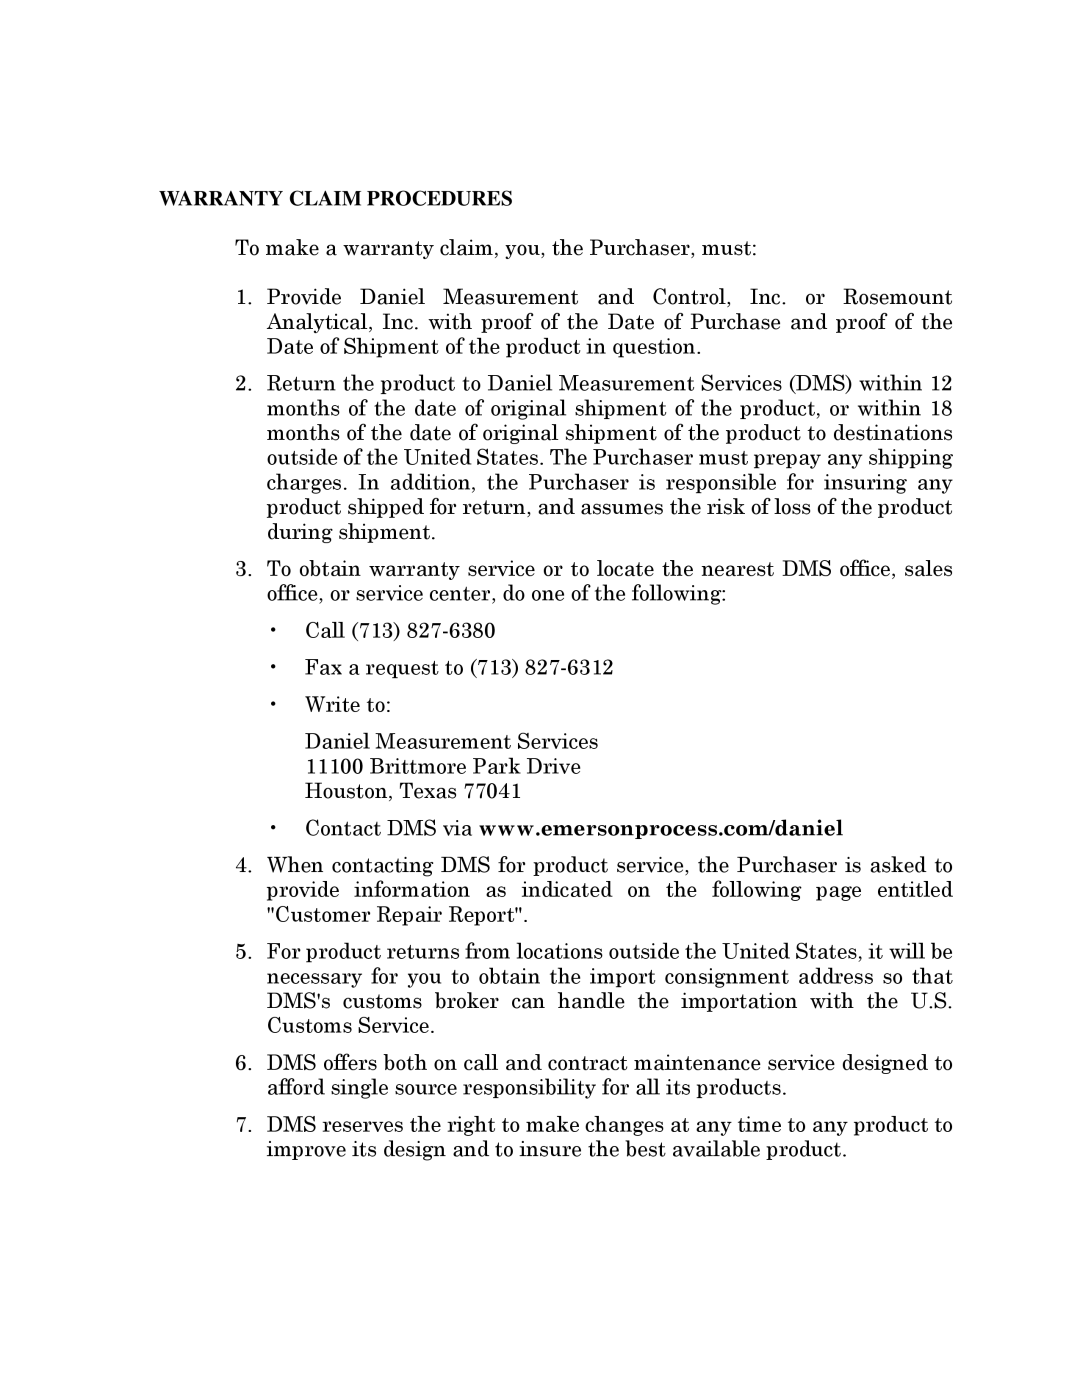 Emerson Process Management 3-9000-745 manual Warranty Claim Procedures 